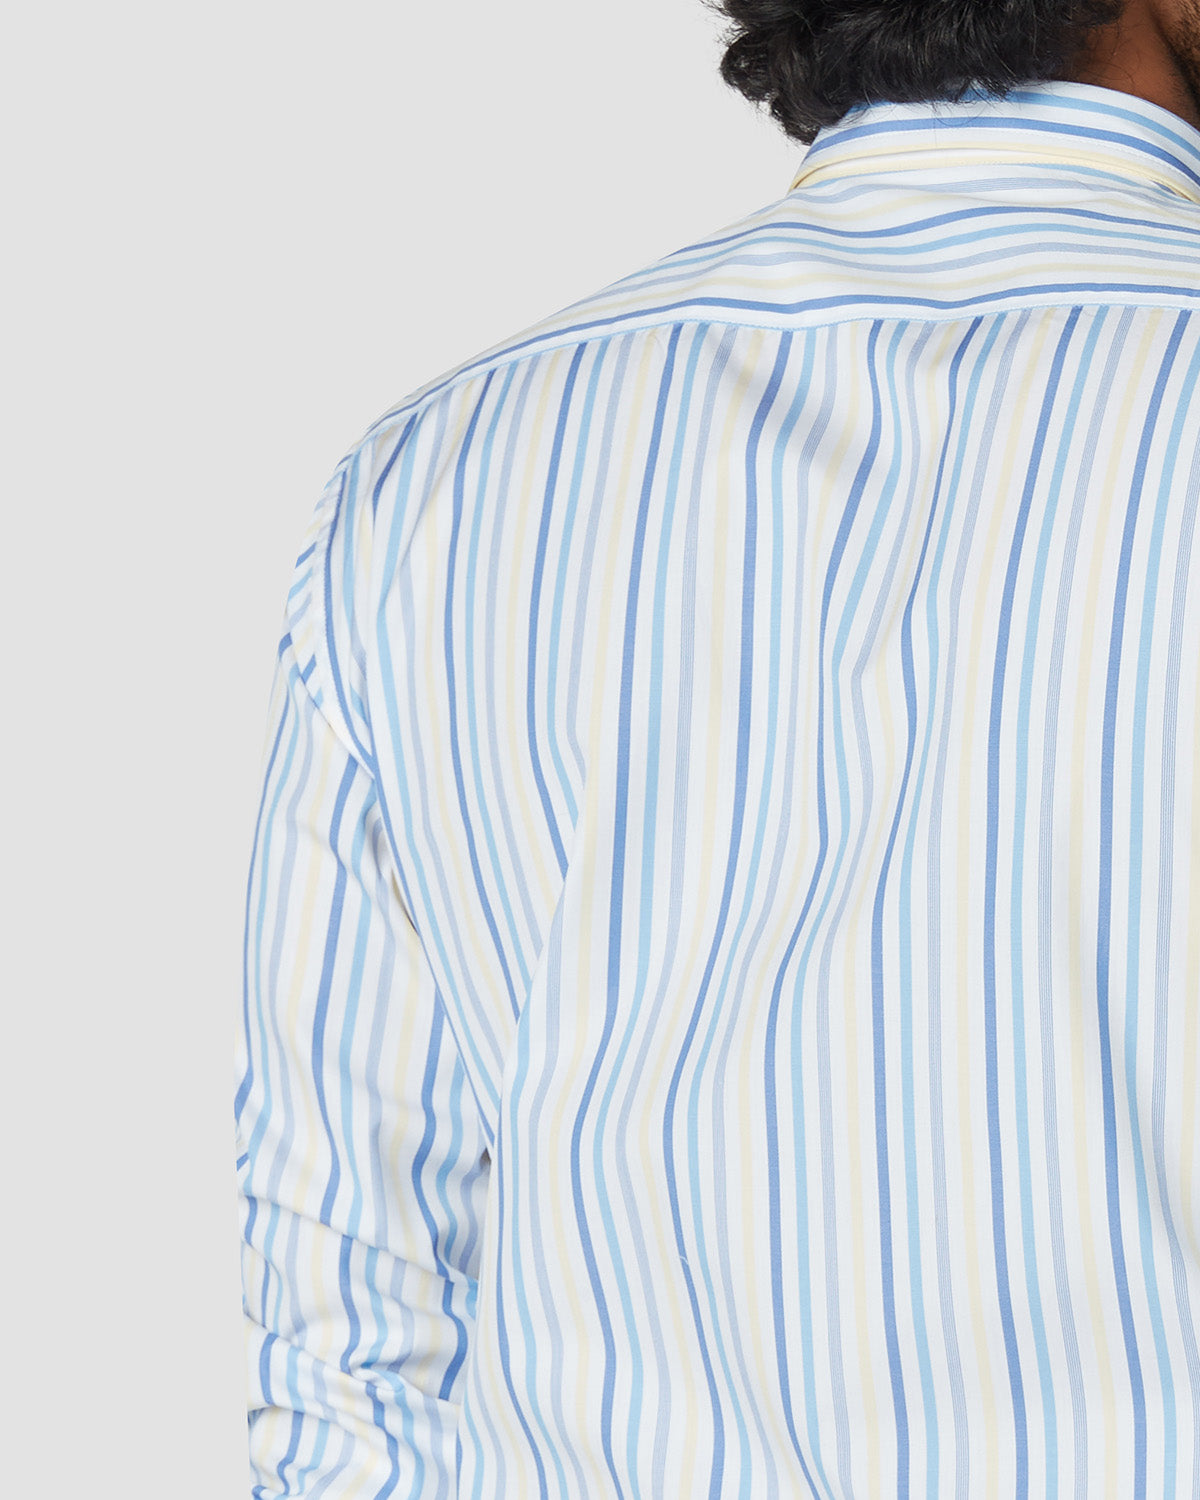 Bombay Shirt Company - Somelos Praia Striped Shirt